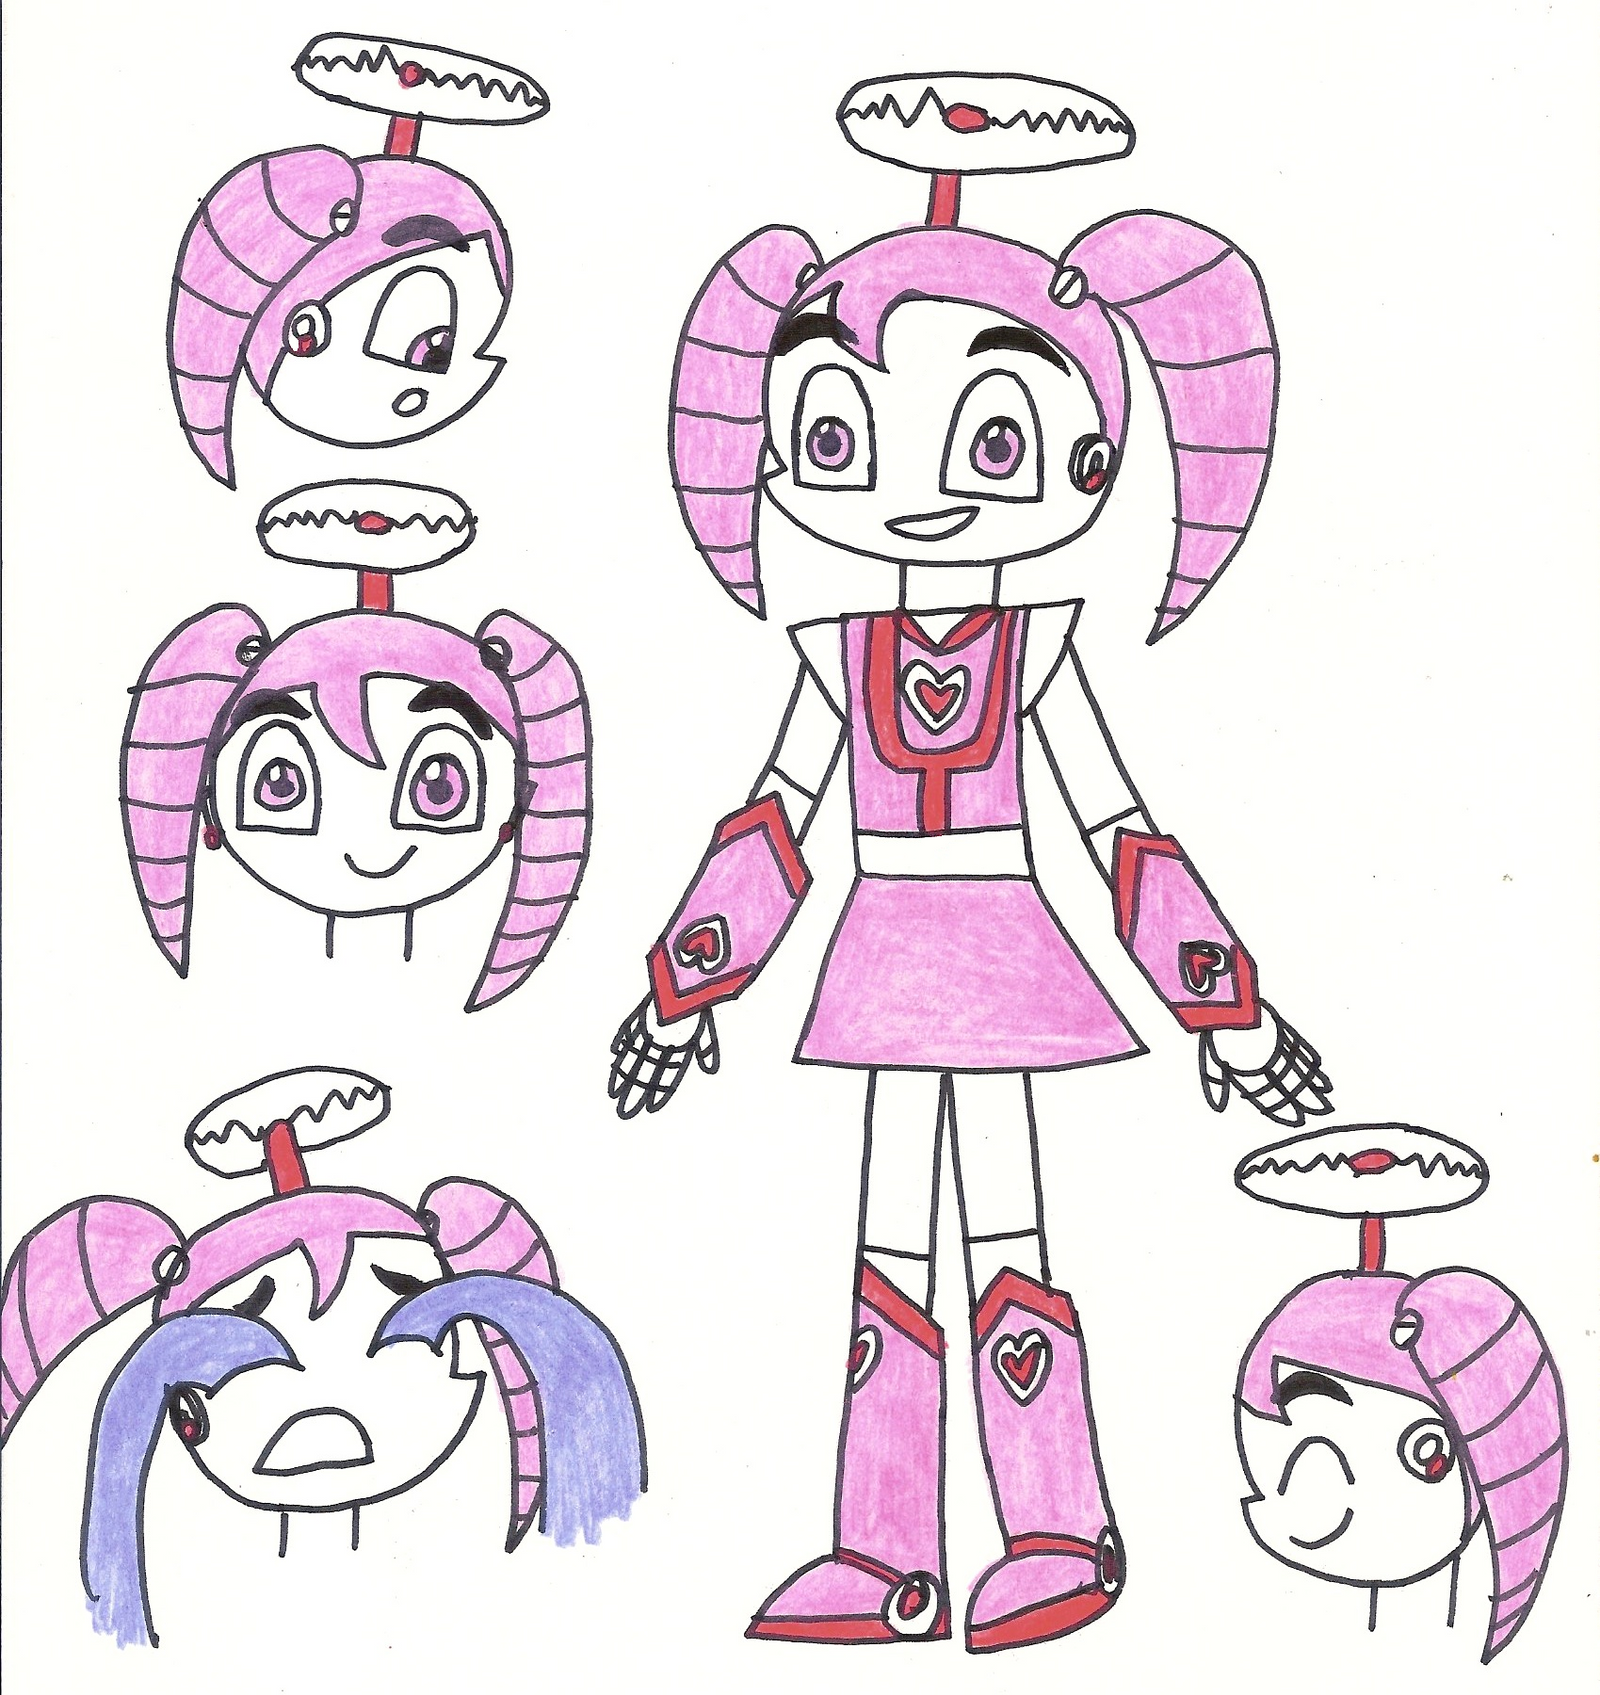 HaVTitH - Ai-Ya the Robot Girl in cartoon style by Magic-Kristina-KW on